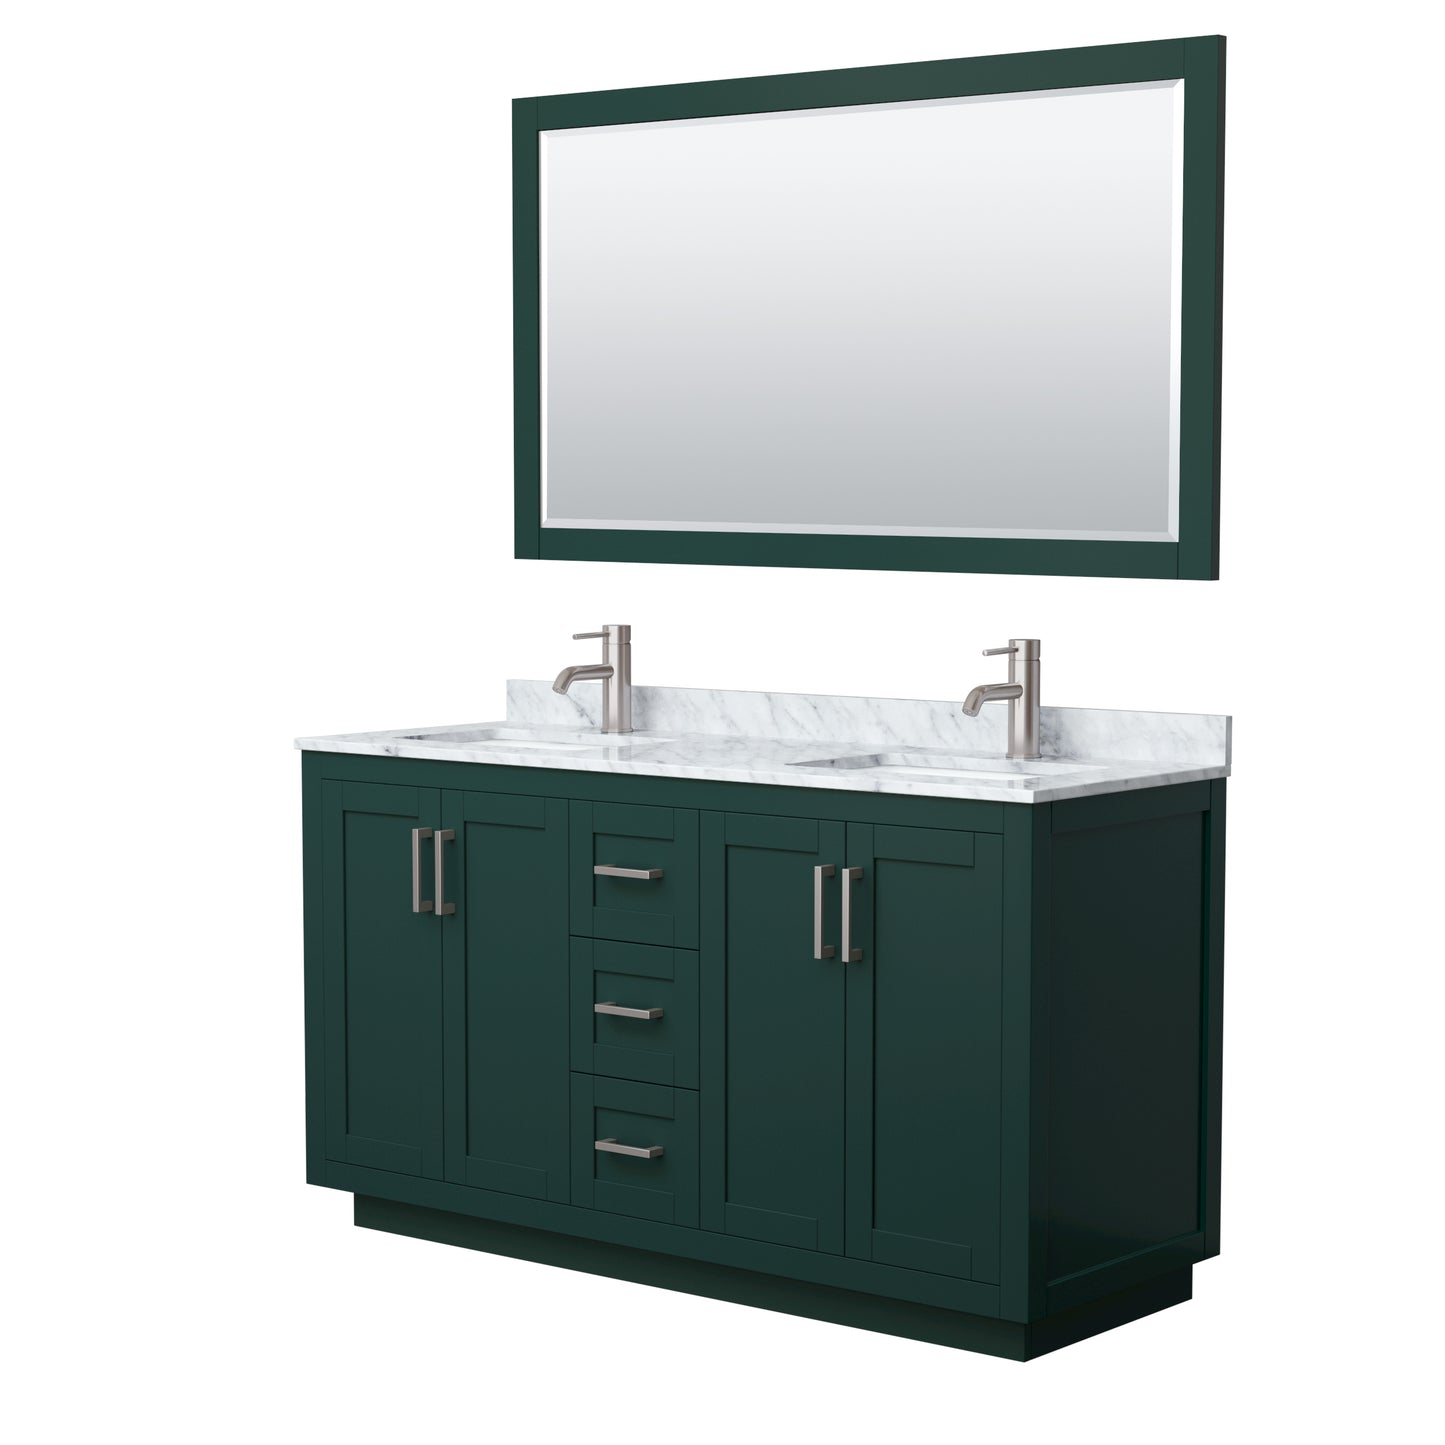 Wyndham Miranda 60 Inch Double Bathroom Vanity in Green with White Carrara Marble Countertop Undermount Square Sinks and Trim - Luxe Bathroom Vanities